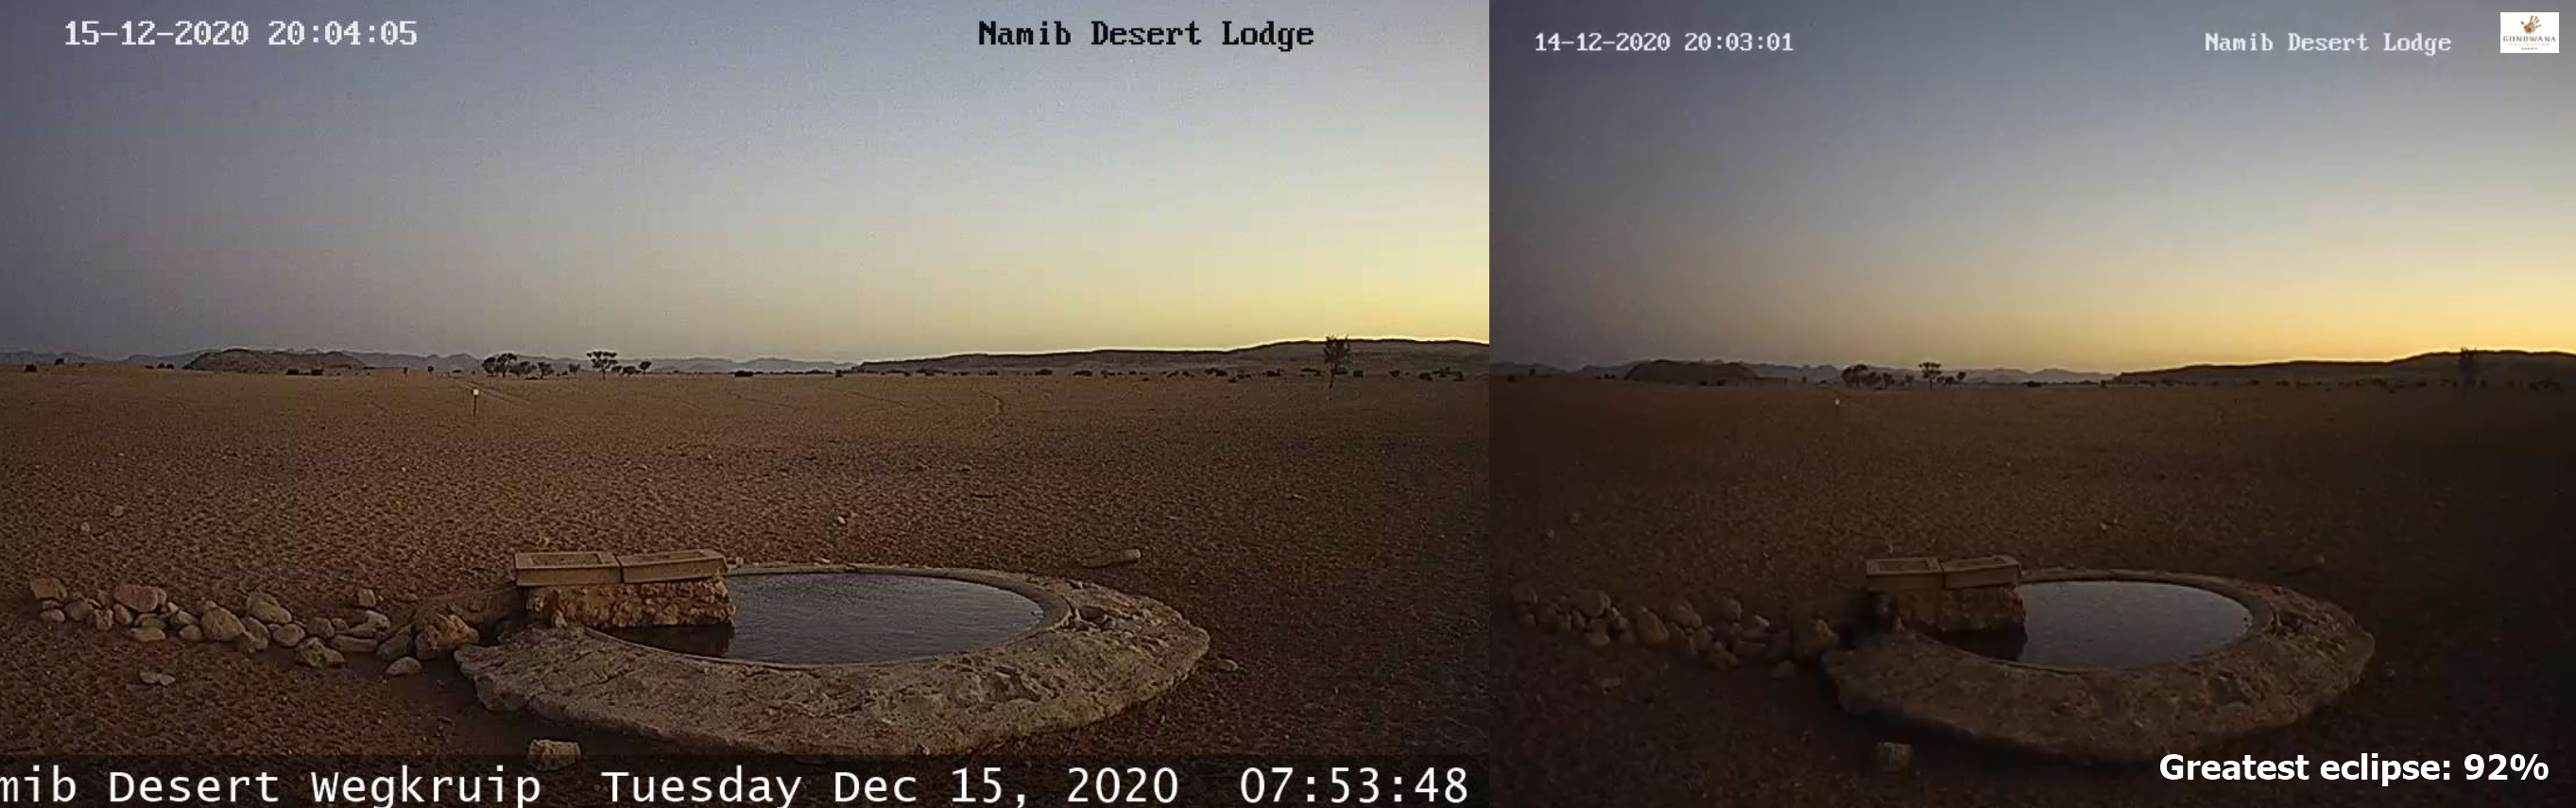  Namib Desert Wegkruip twilight eclipse 2020